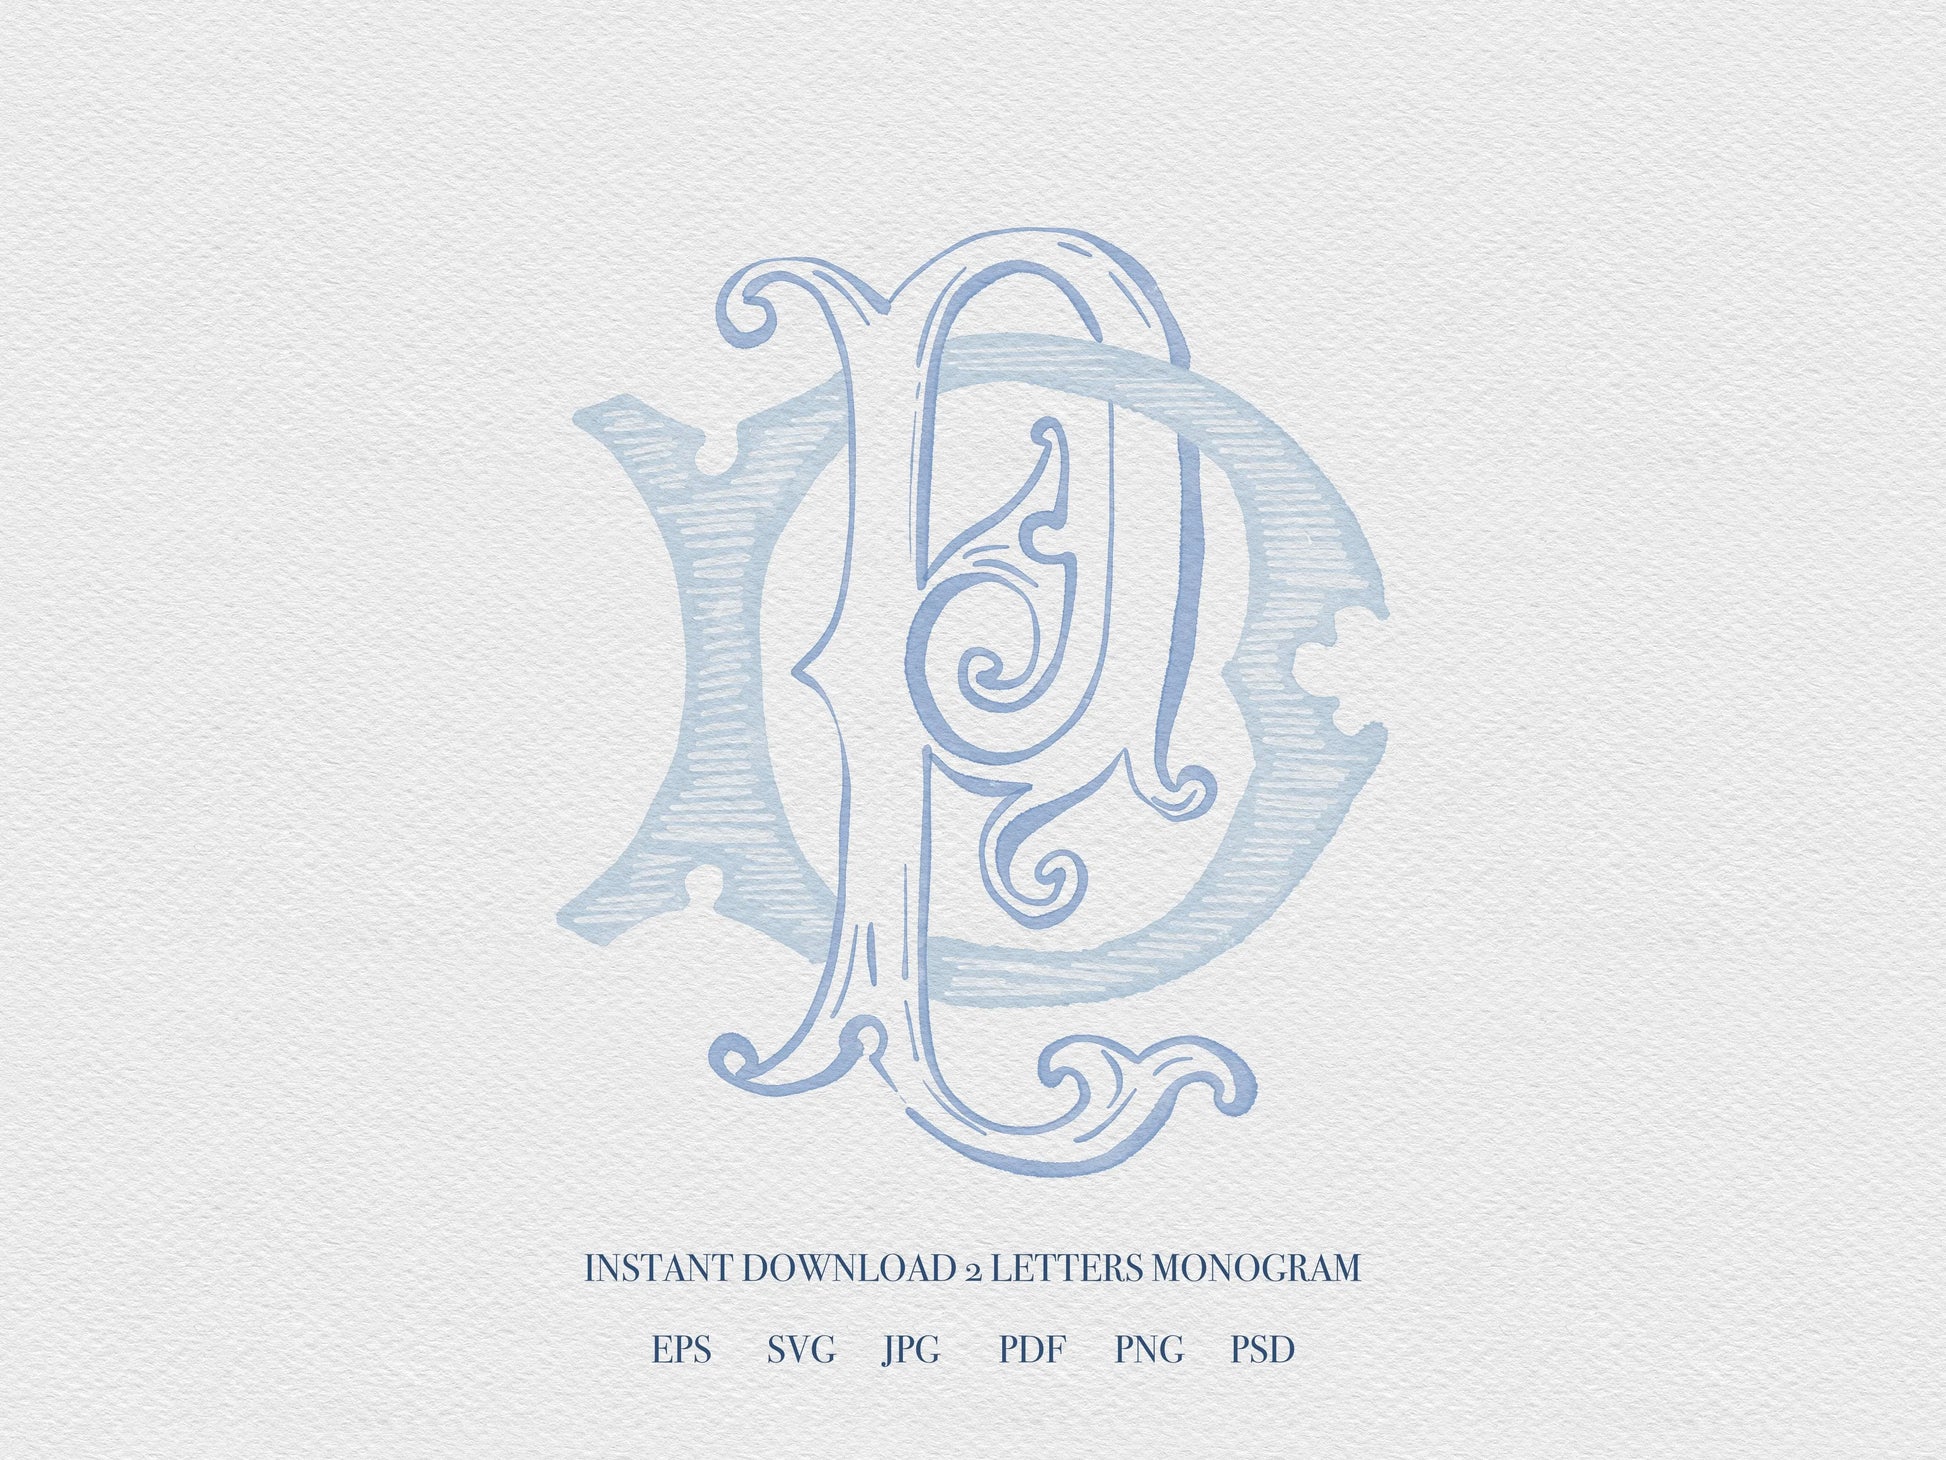 2 Letter Monogram with Letters DP | Digital Download - Wedding Monogram SVG, Personal Logo, Wedding Logo for Wedding Invitations The Wedding Crest Lab